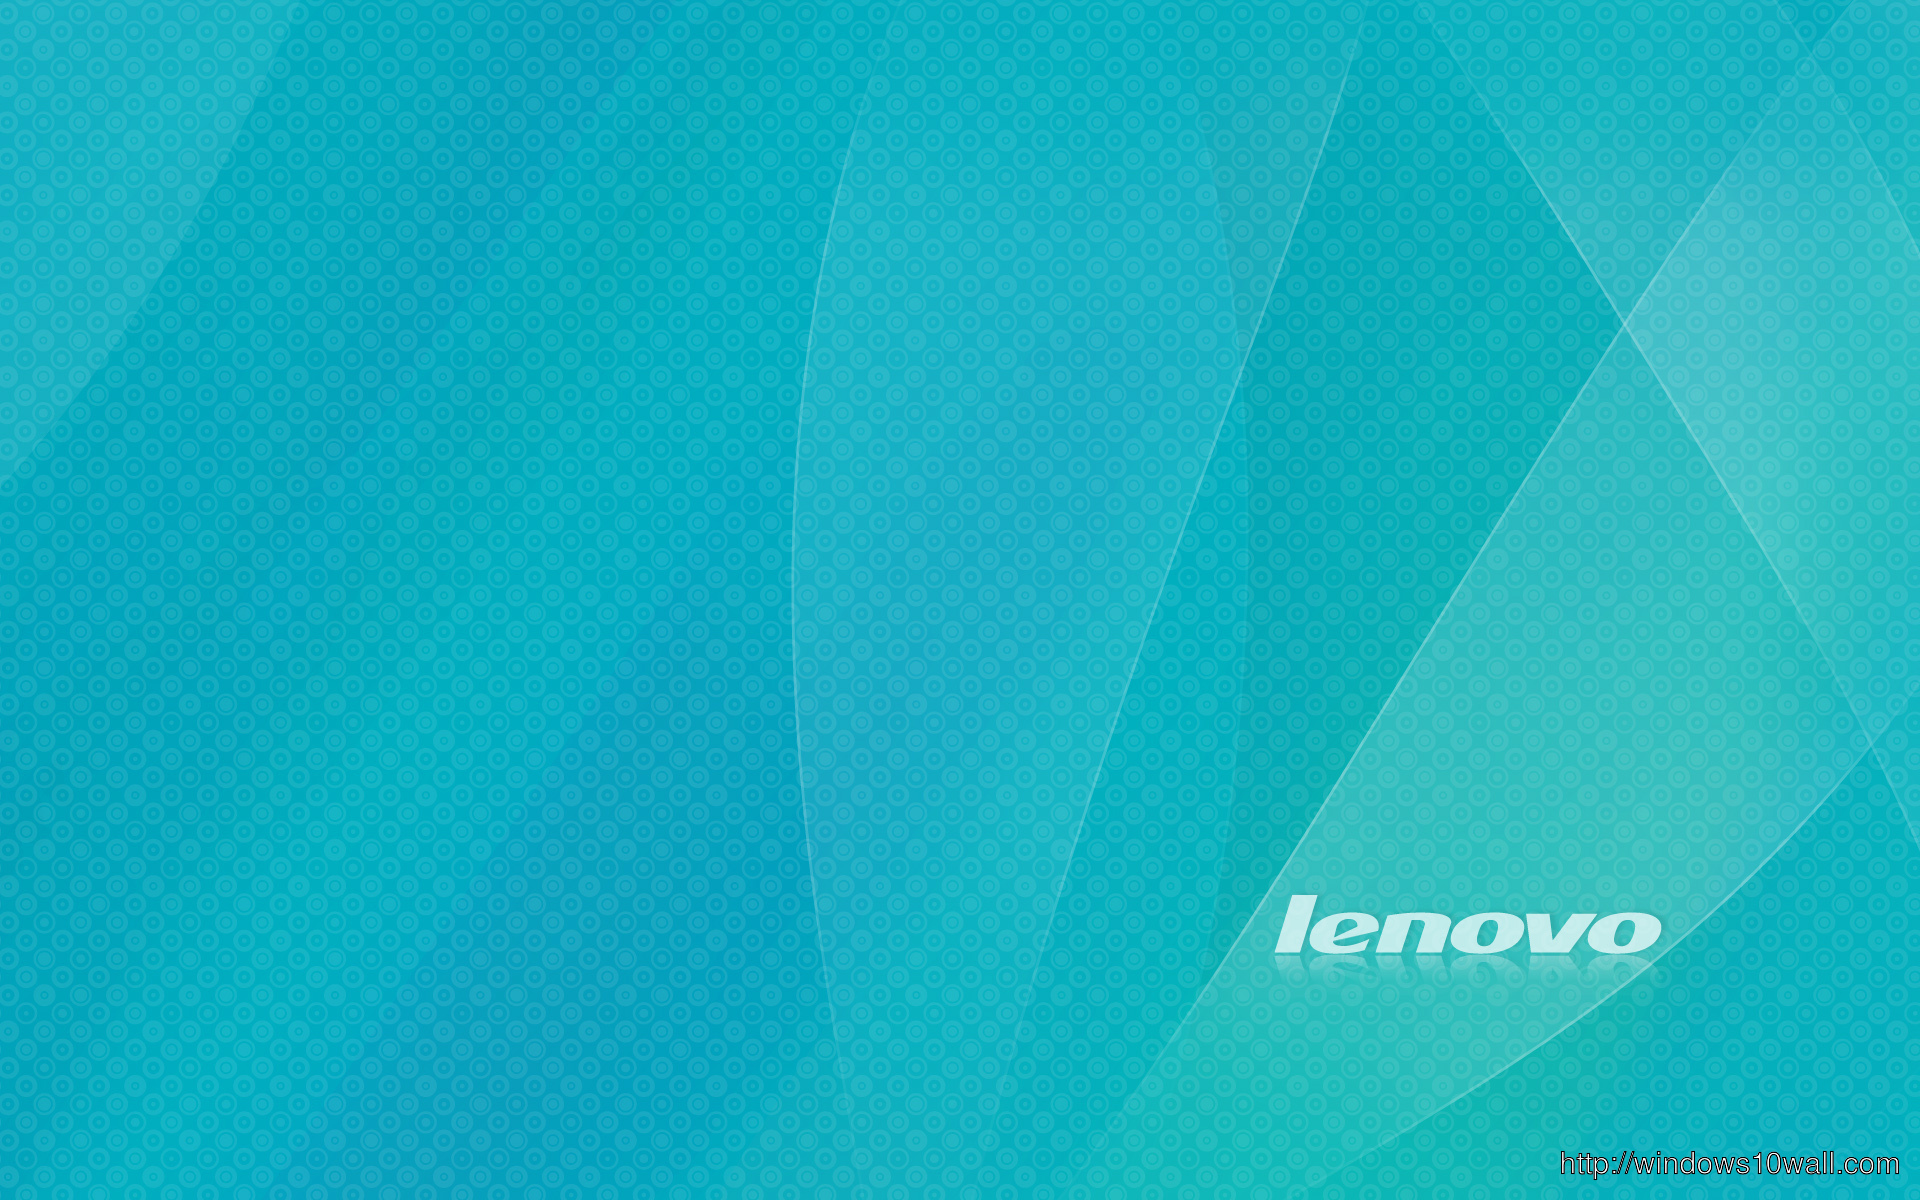 Windows 7 Style Lenovo Background Wallpaper